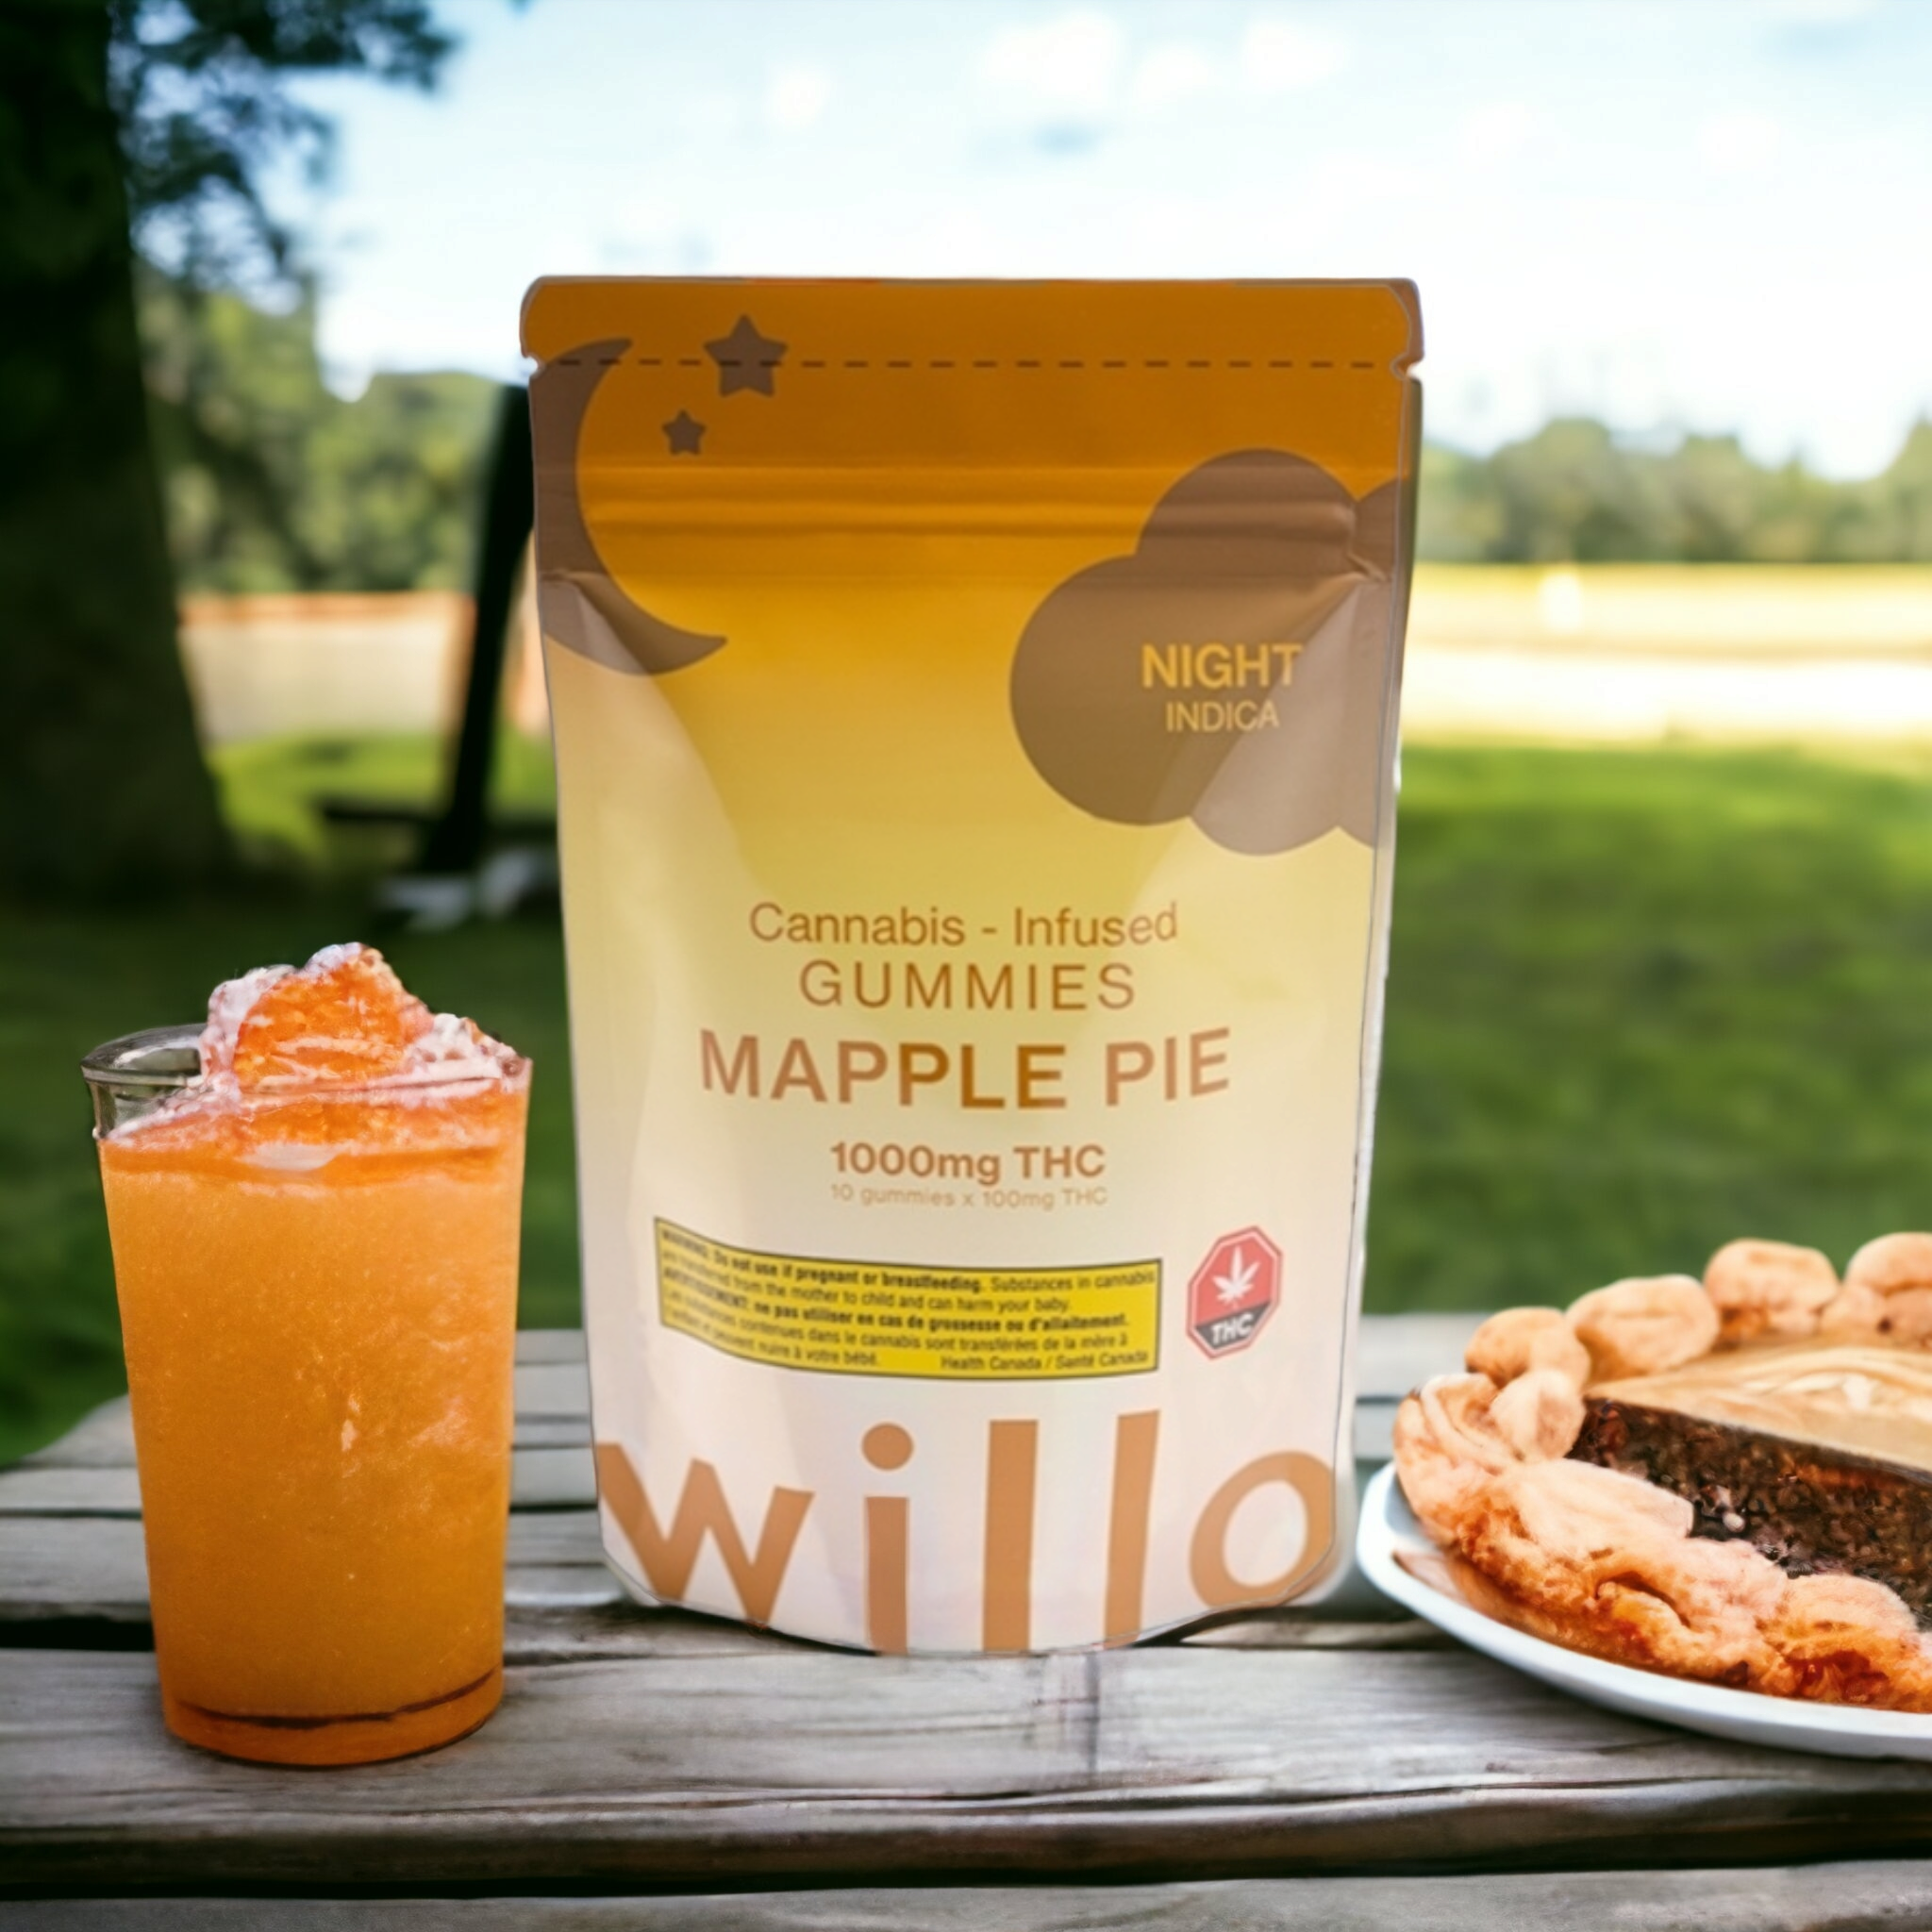 Willo – 1000mg THC Maple Pie (Night) Gummies